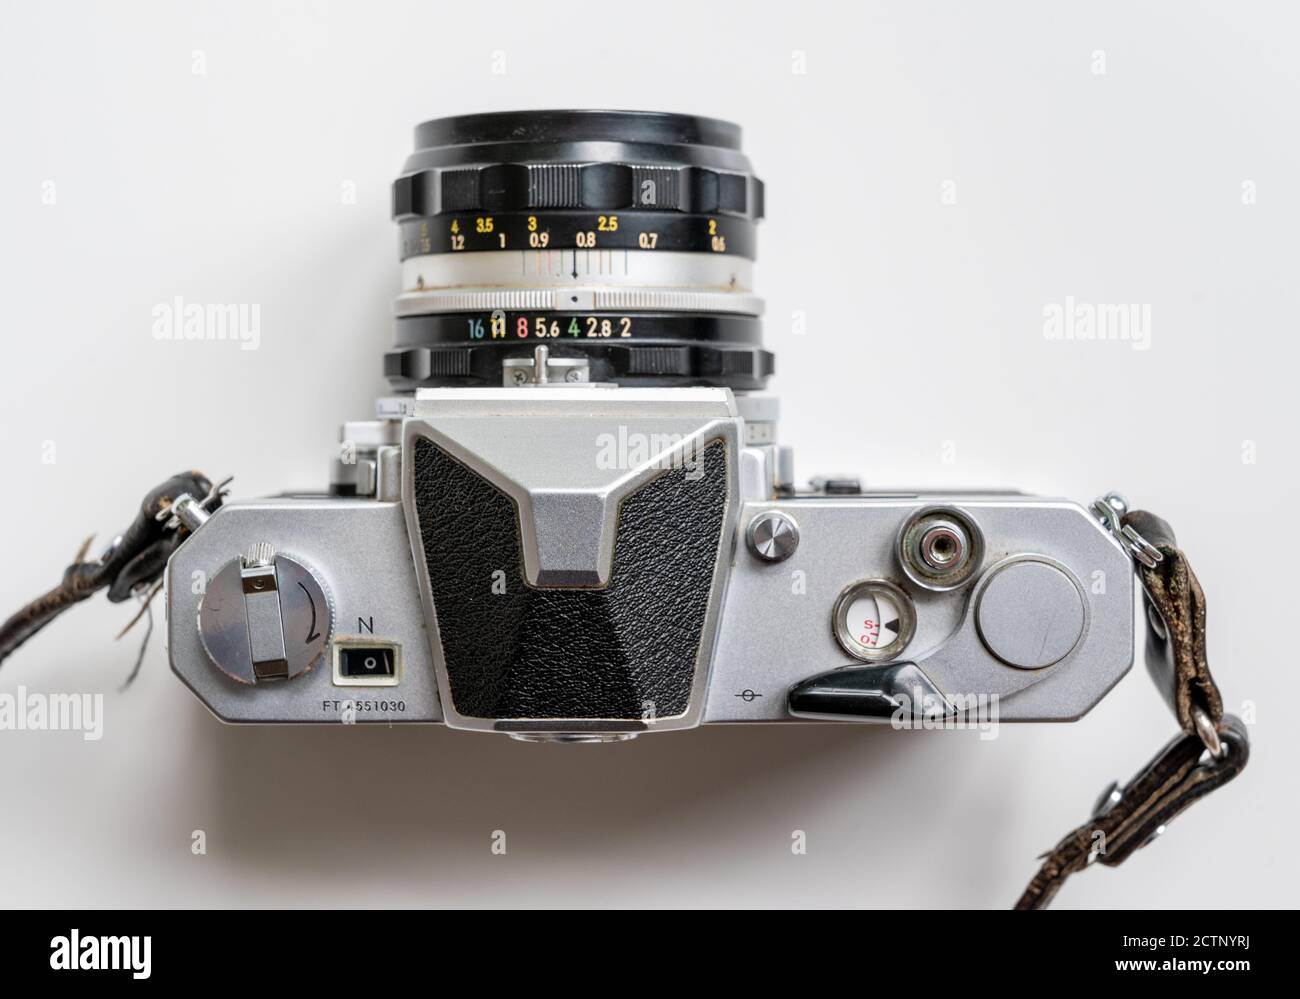 Nikon Nikkormat FTN camera body and Nikkor 50mm 1:2 lens seen from